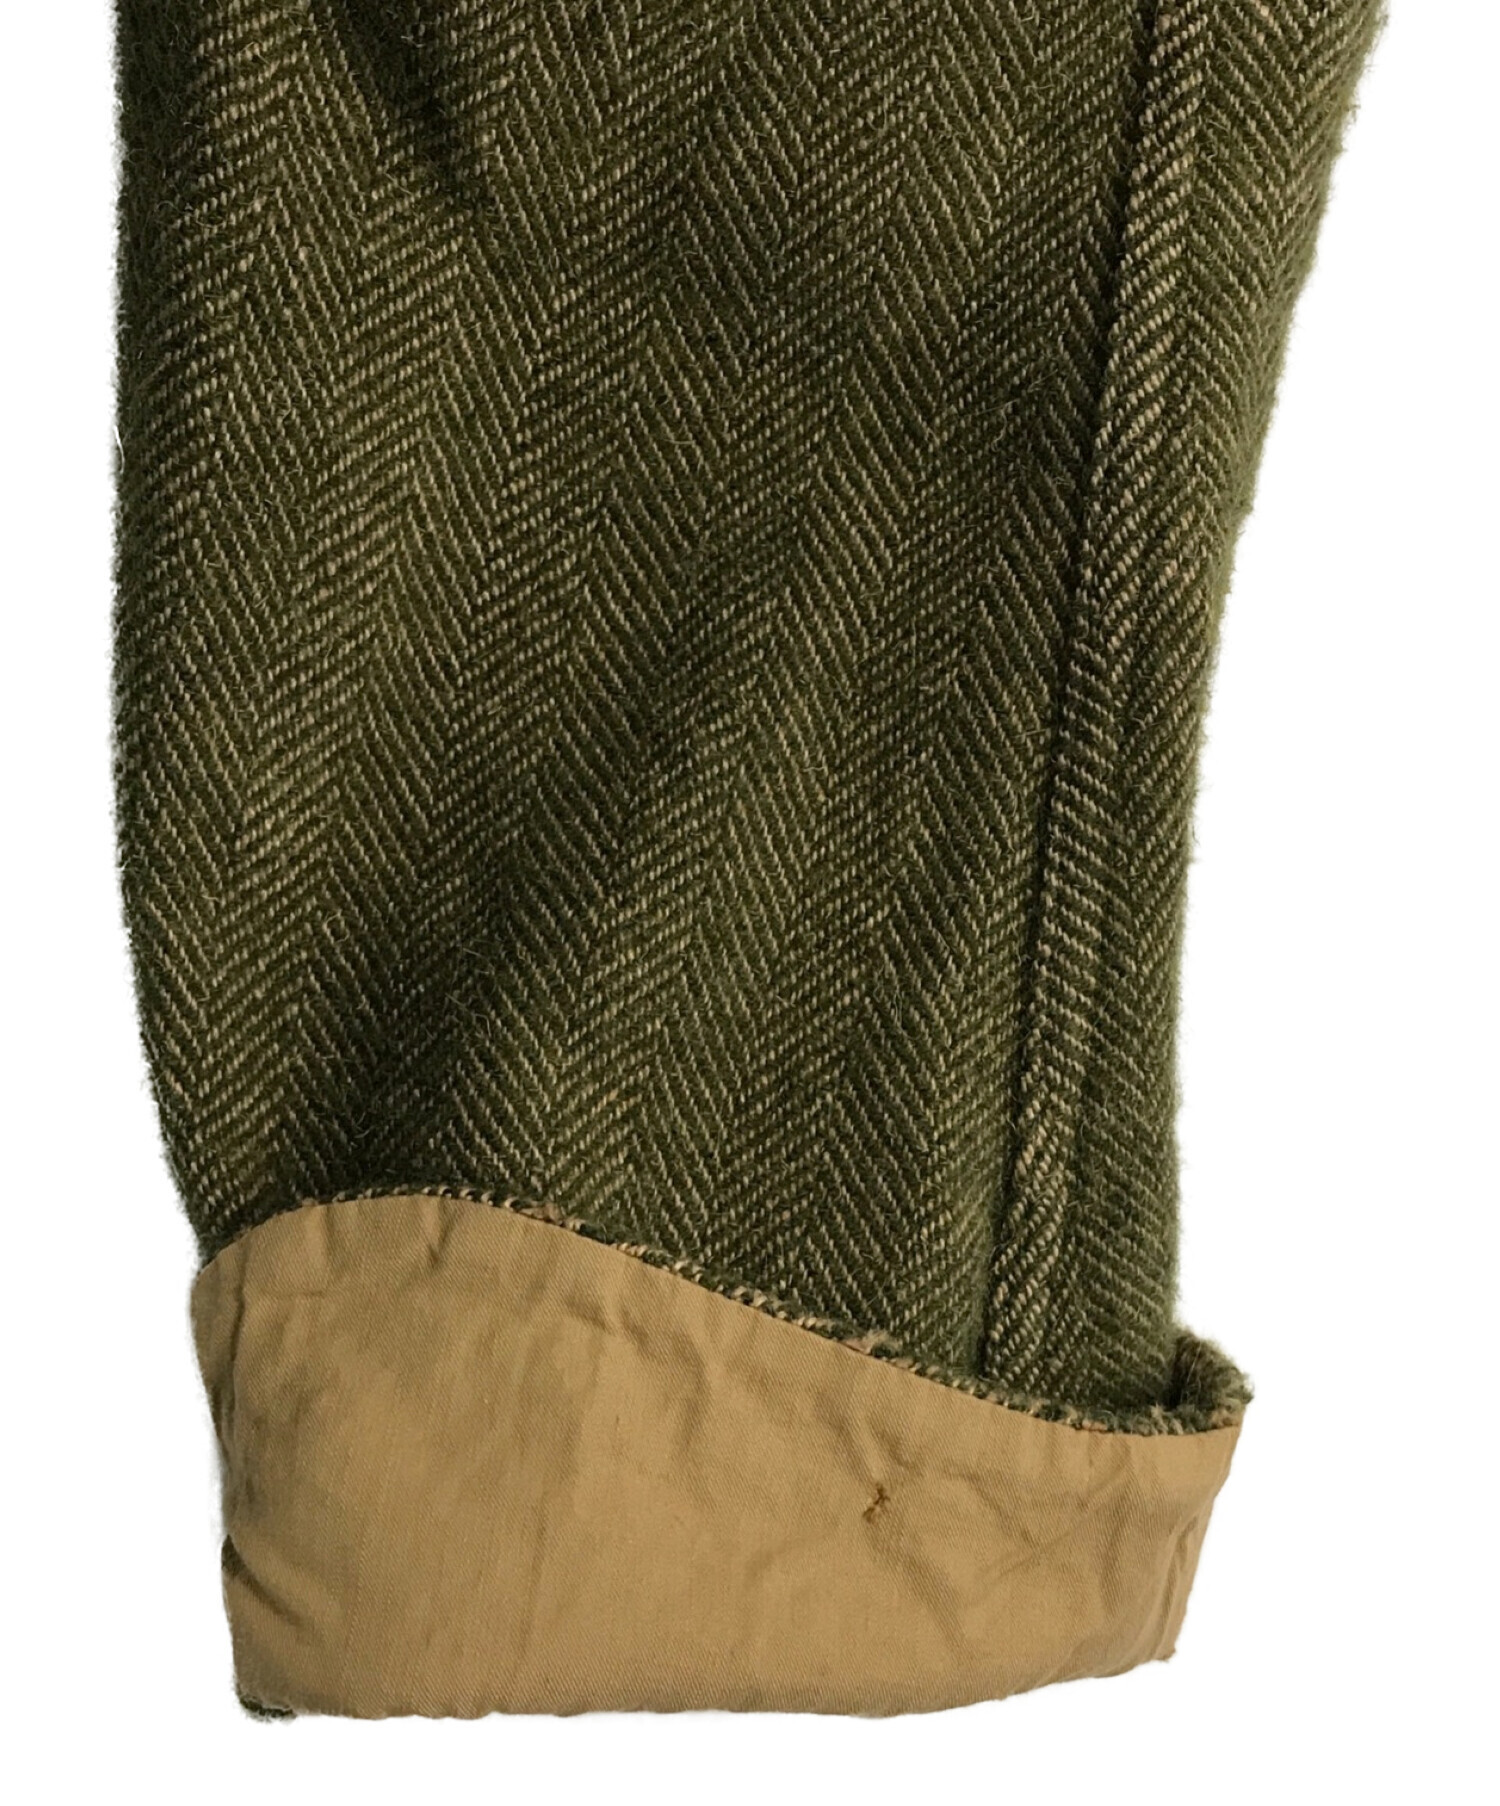 KAPITAL (キャピタル) 加工ヘリンボーンファーマーズジャケット グリーン サイズ:SIZE 3